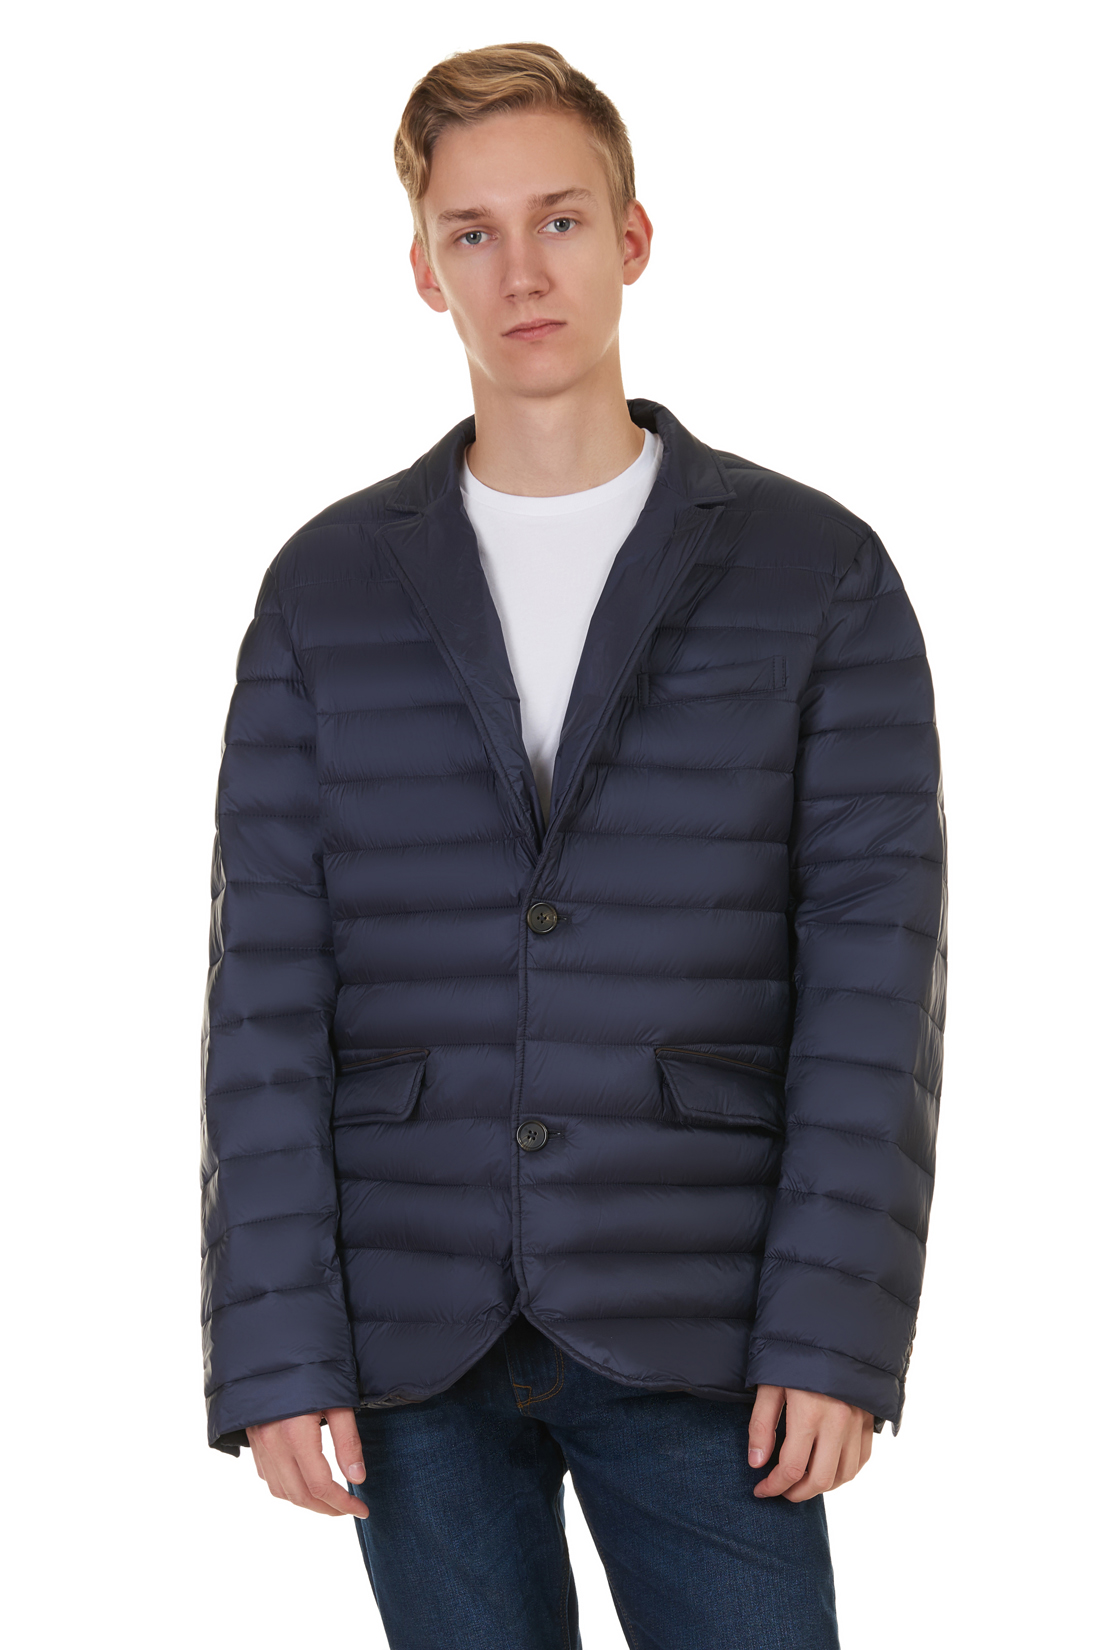 Куртка-пиджак (арт. baon B537561), размер XL, цвет синий Куртка-пиджак (арт. baon B537561) - фото 1